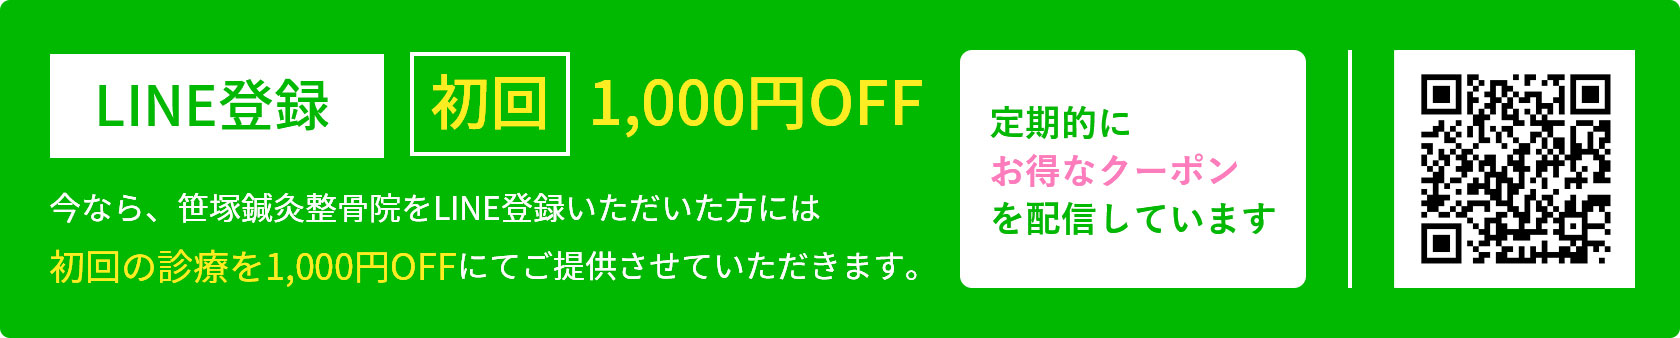 LINE登録 初回1000円OFF